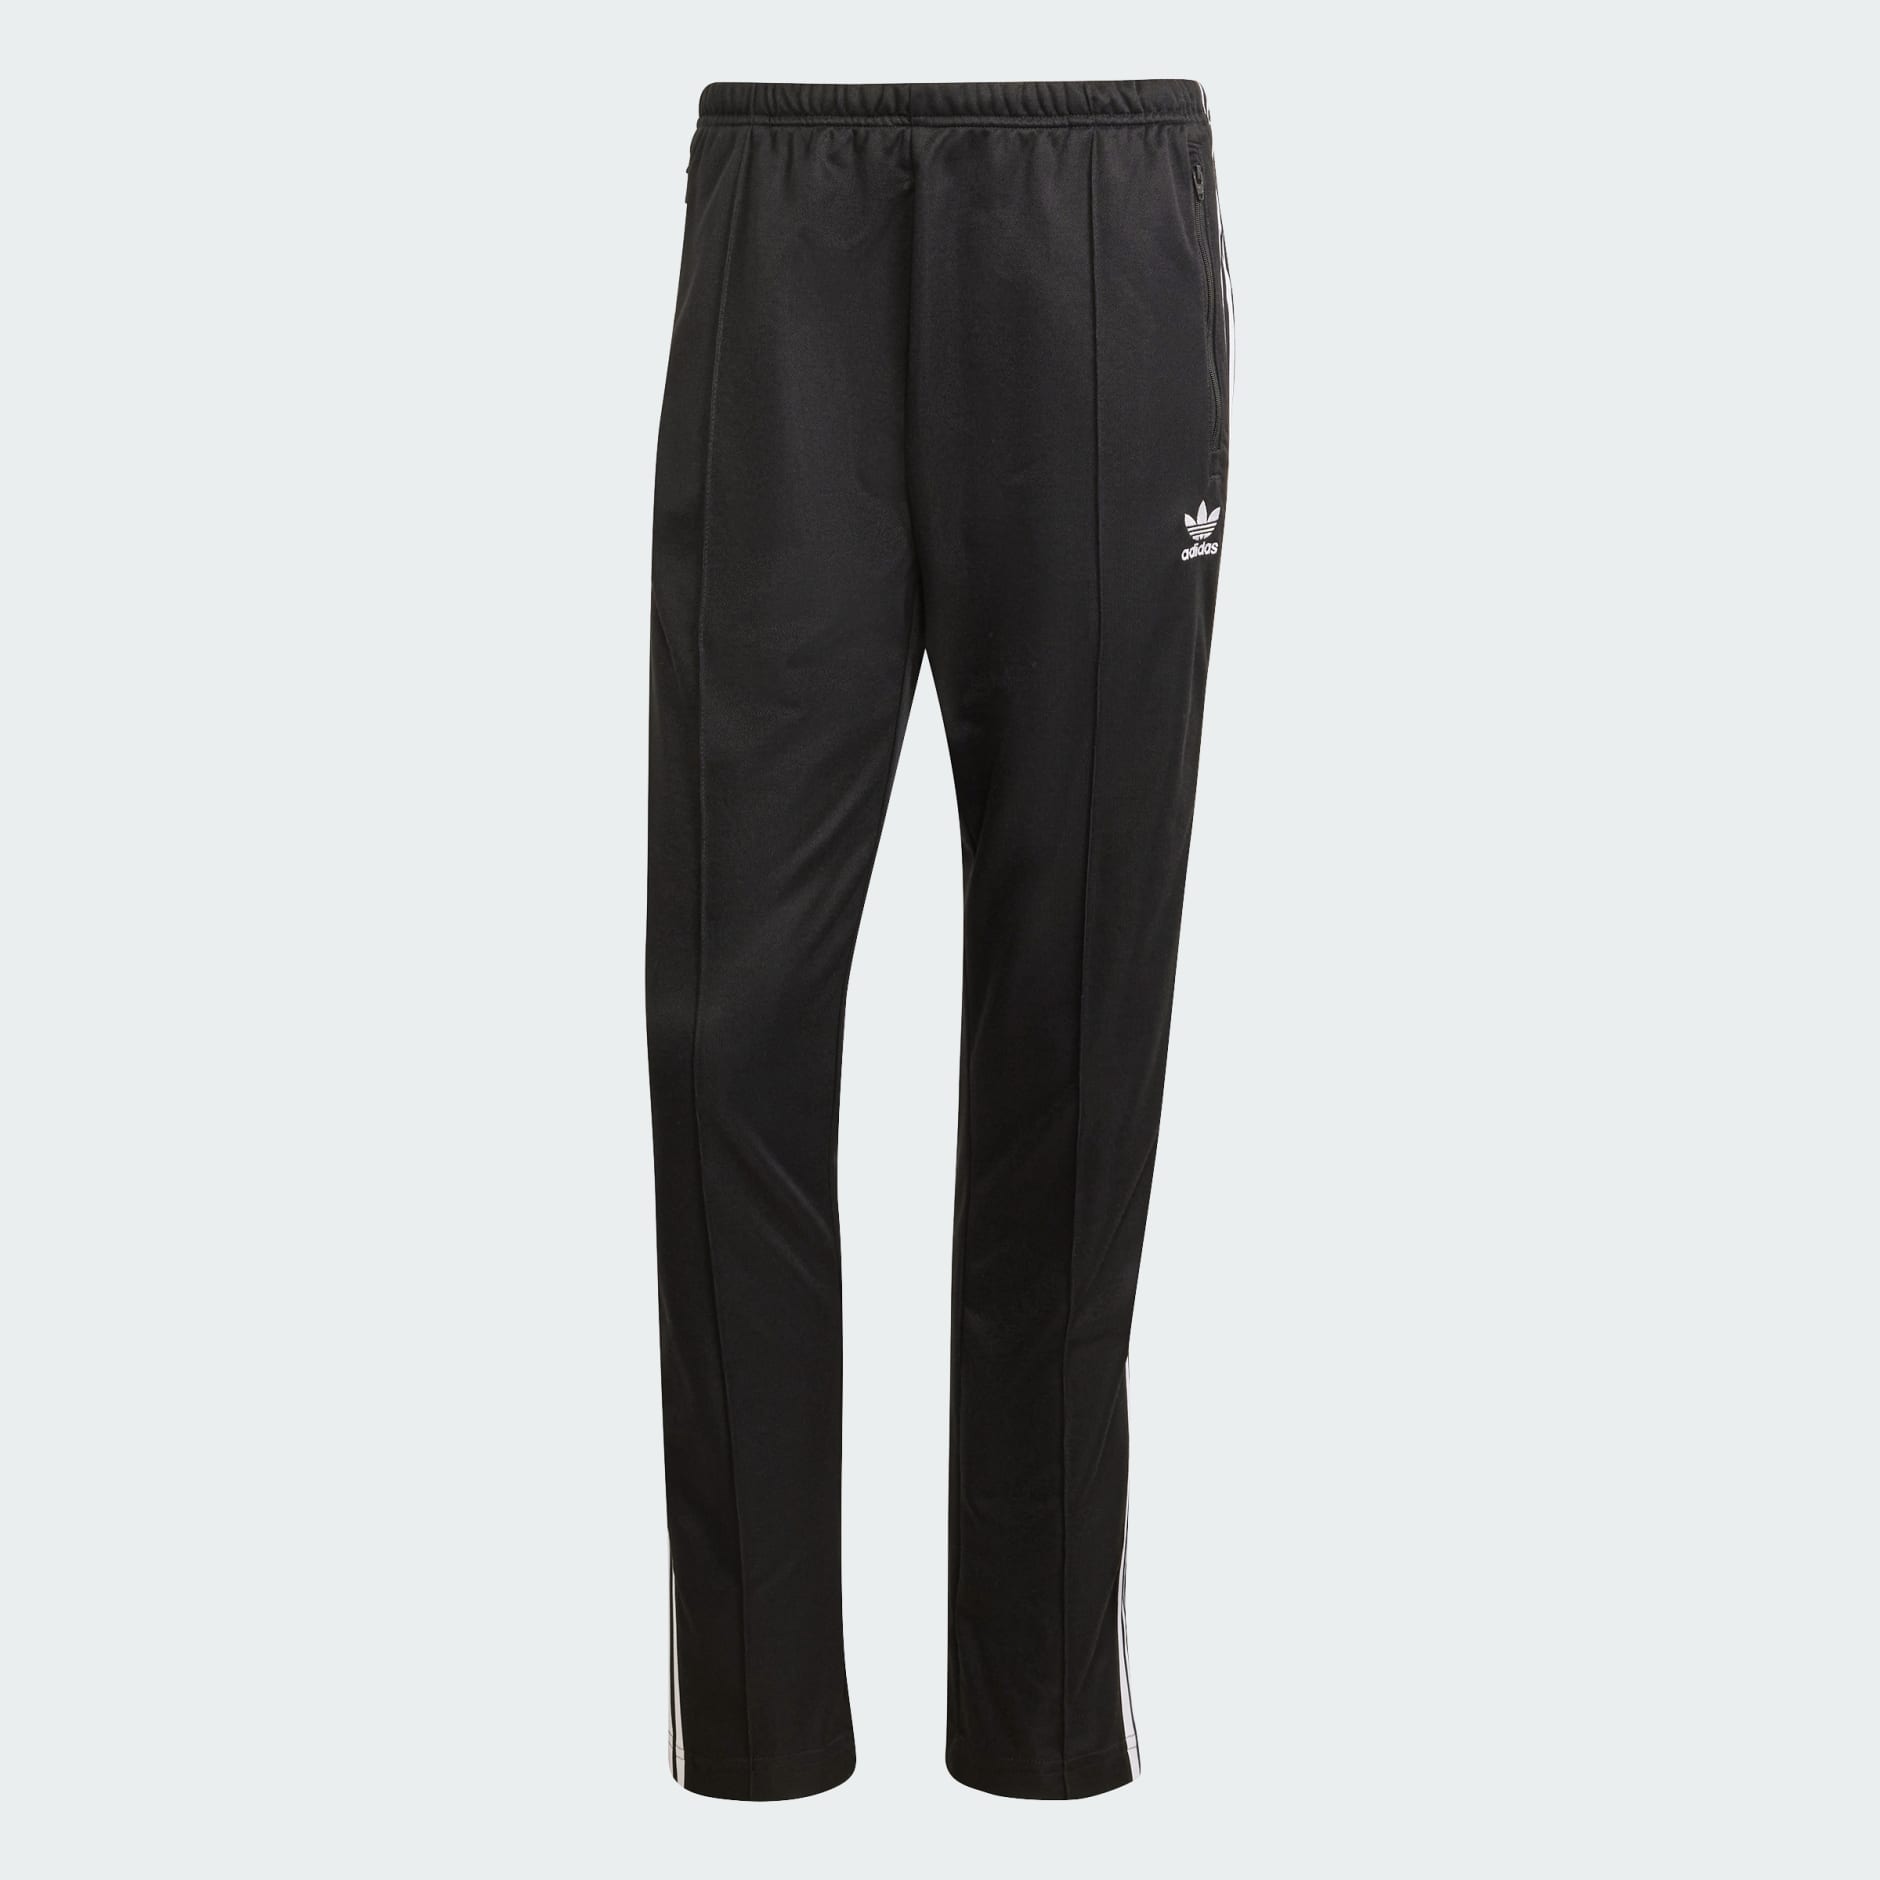  adidas Originals Men's Adicolor Classics Beckenbauer Track Pants,  Black, Small : Clothing, Shoes & Jewelry